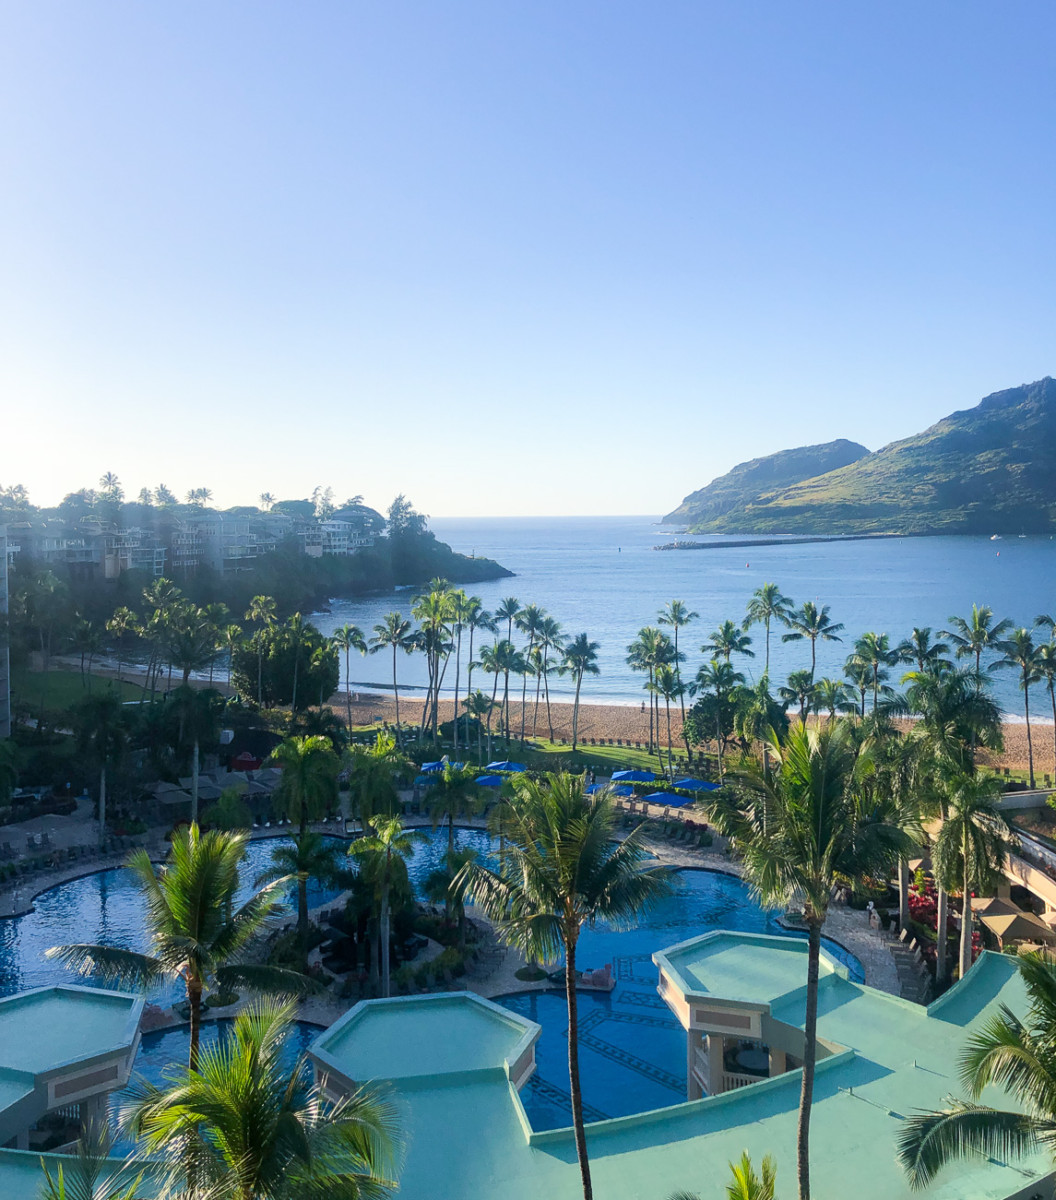 Best Things to Do In Kauai Hawaii | Honeymoon in Kauai | Cobalt Chronicles | Travel Blogger